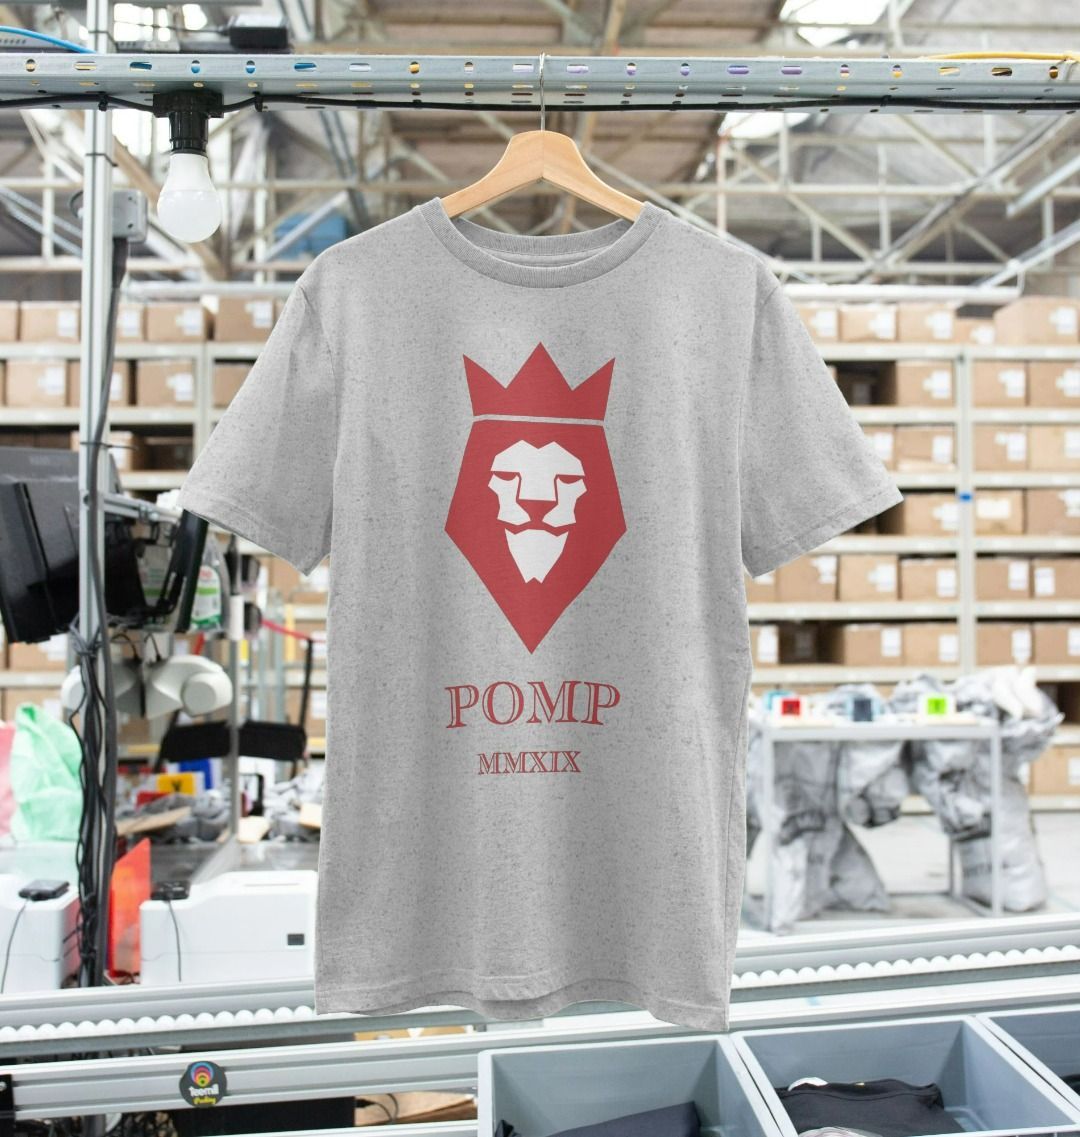 POMP MMXIX circular t-shirt